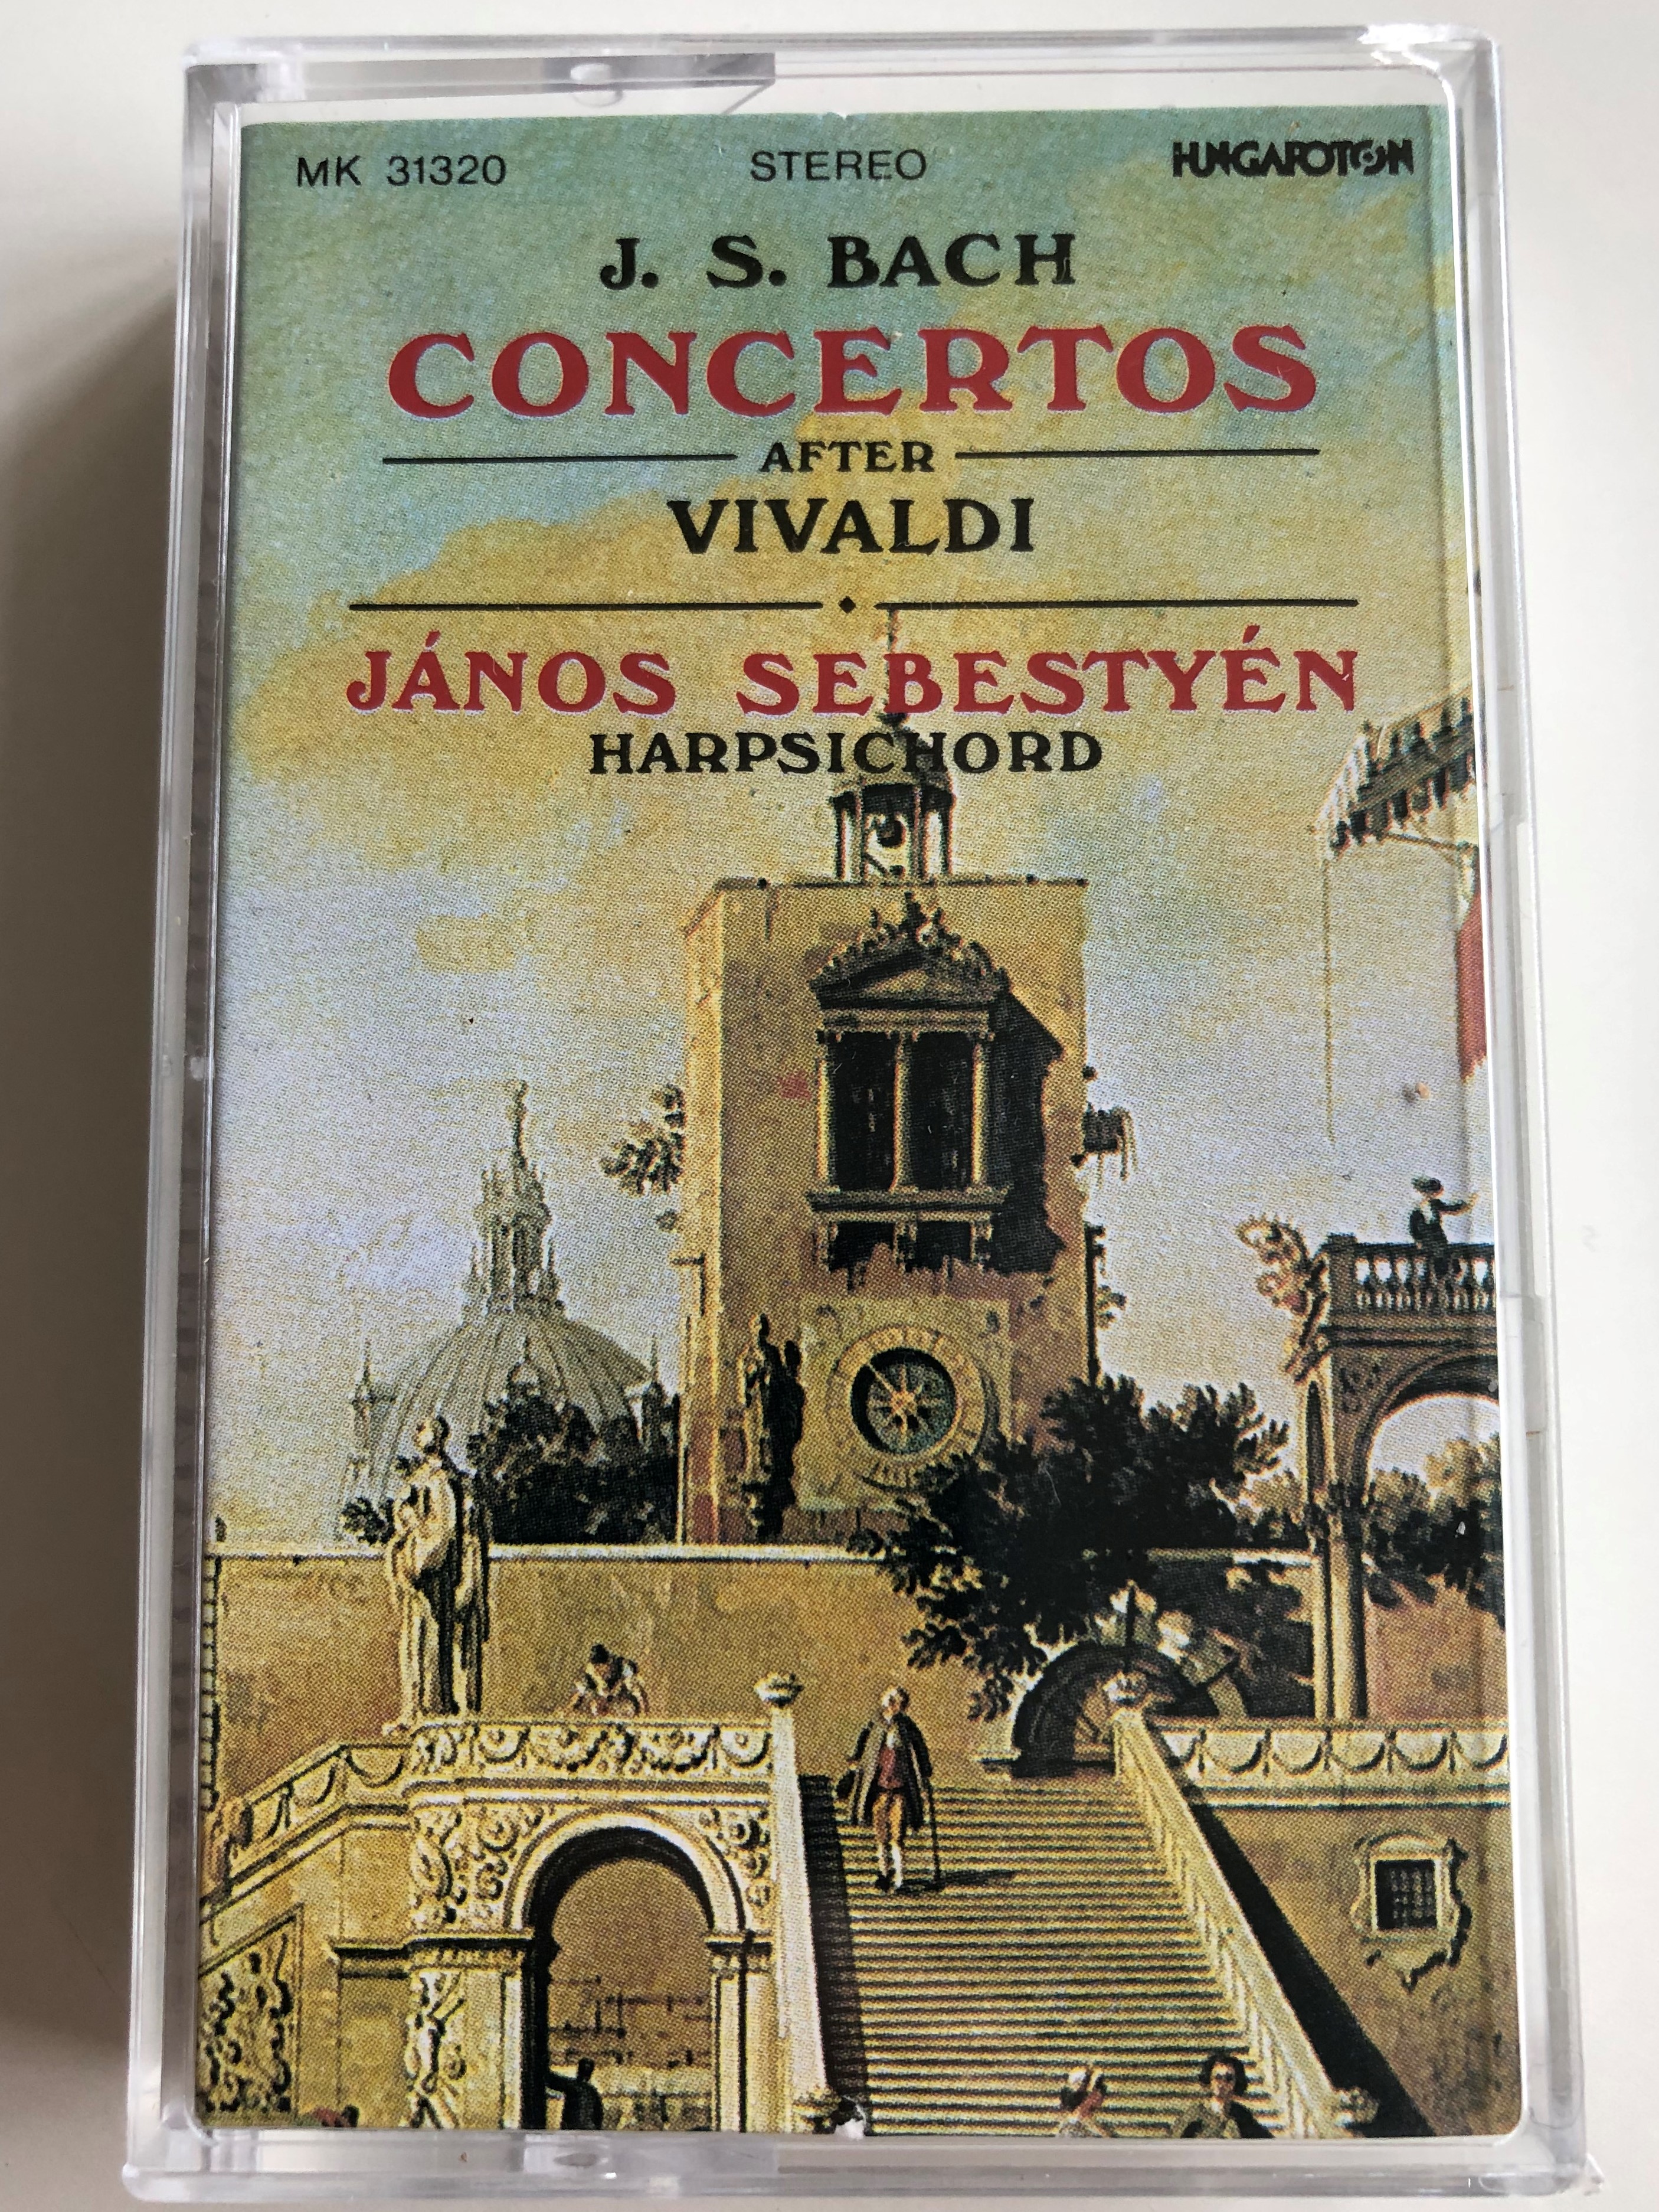 j.-s.-bach-concertos-after-vivaldi-harpsichord-j-nos-sebesty-n-hungaroton-cassette-stereo-mk-31320-1-.jpg